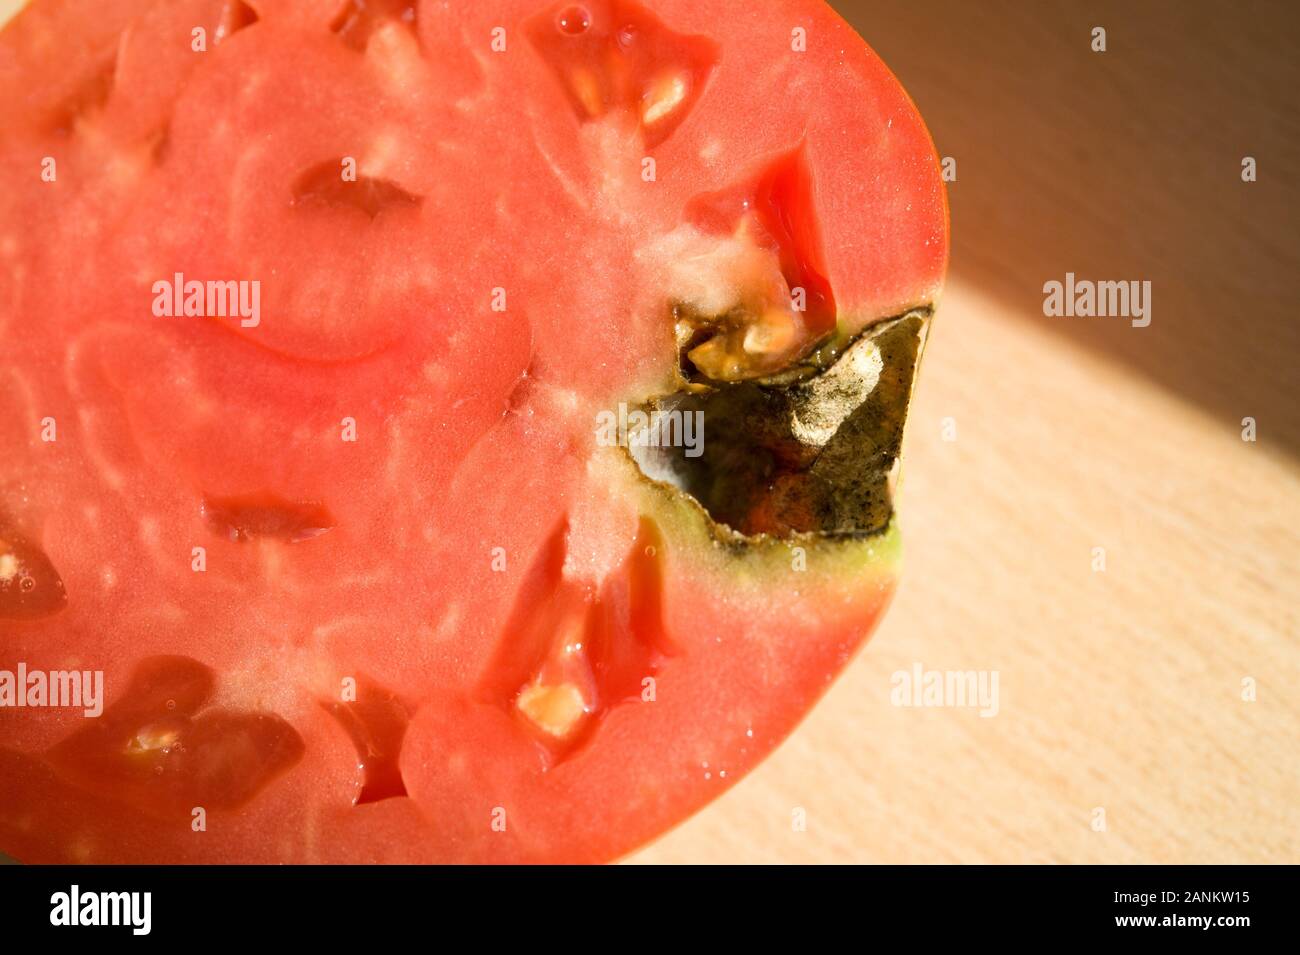 Faule Tomate - Rotten Tomato Stock Photo